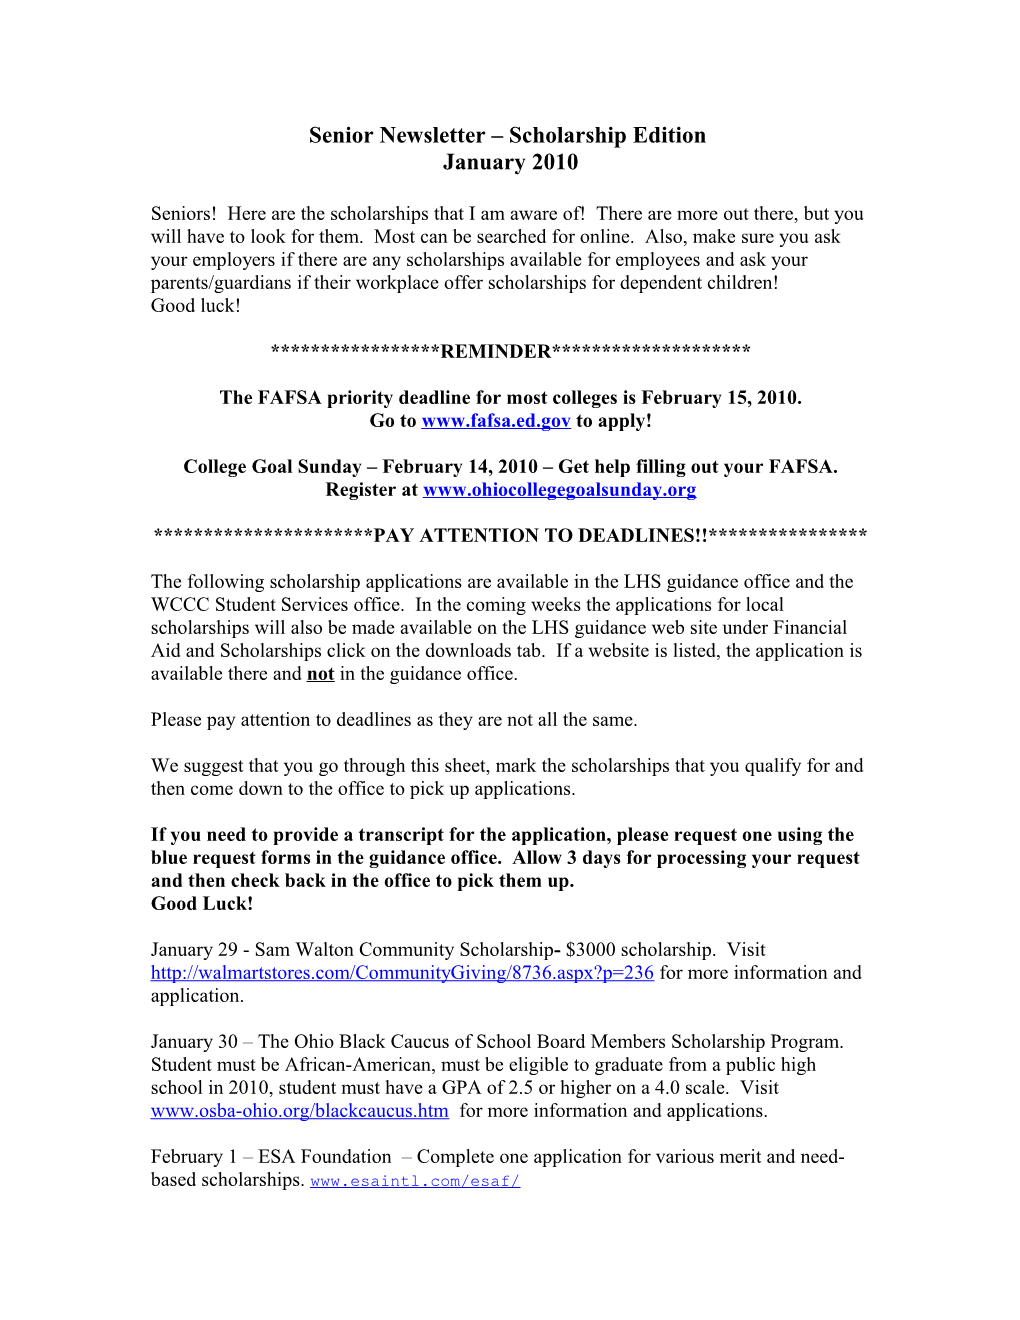 Senior Newsletter Scholarship Edition